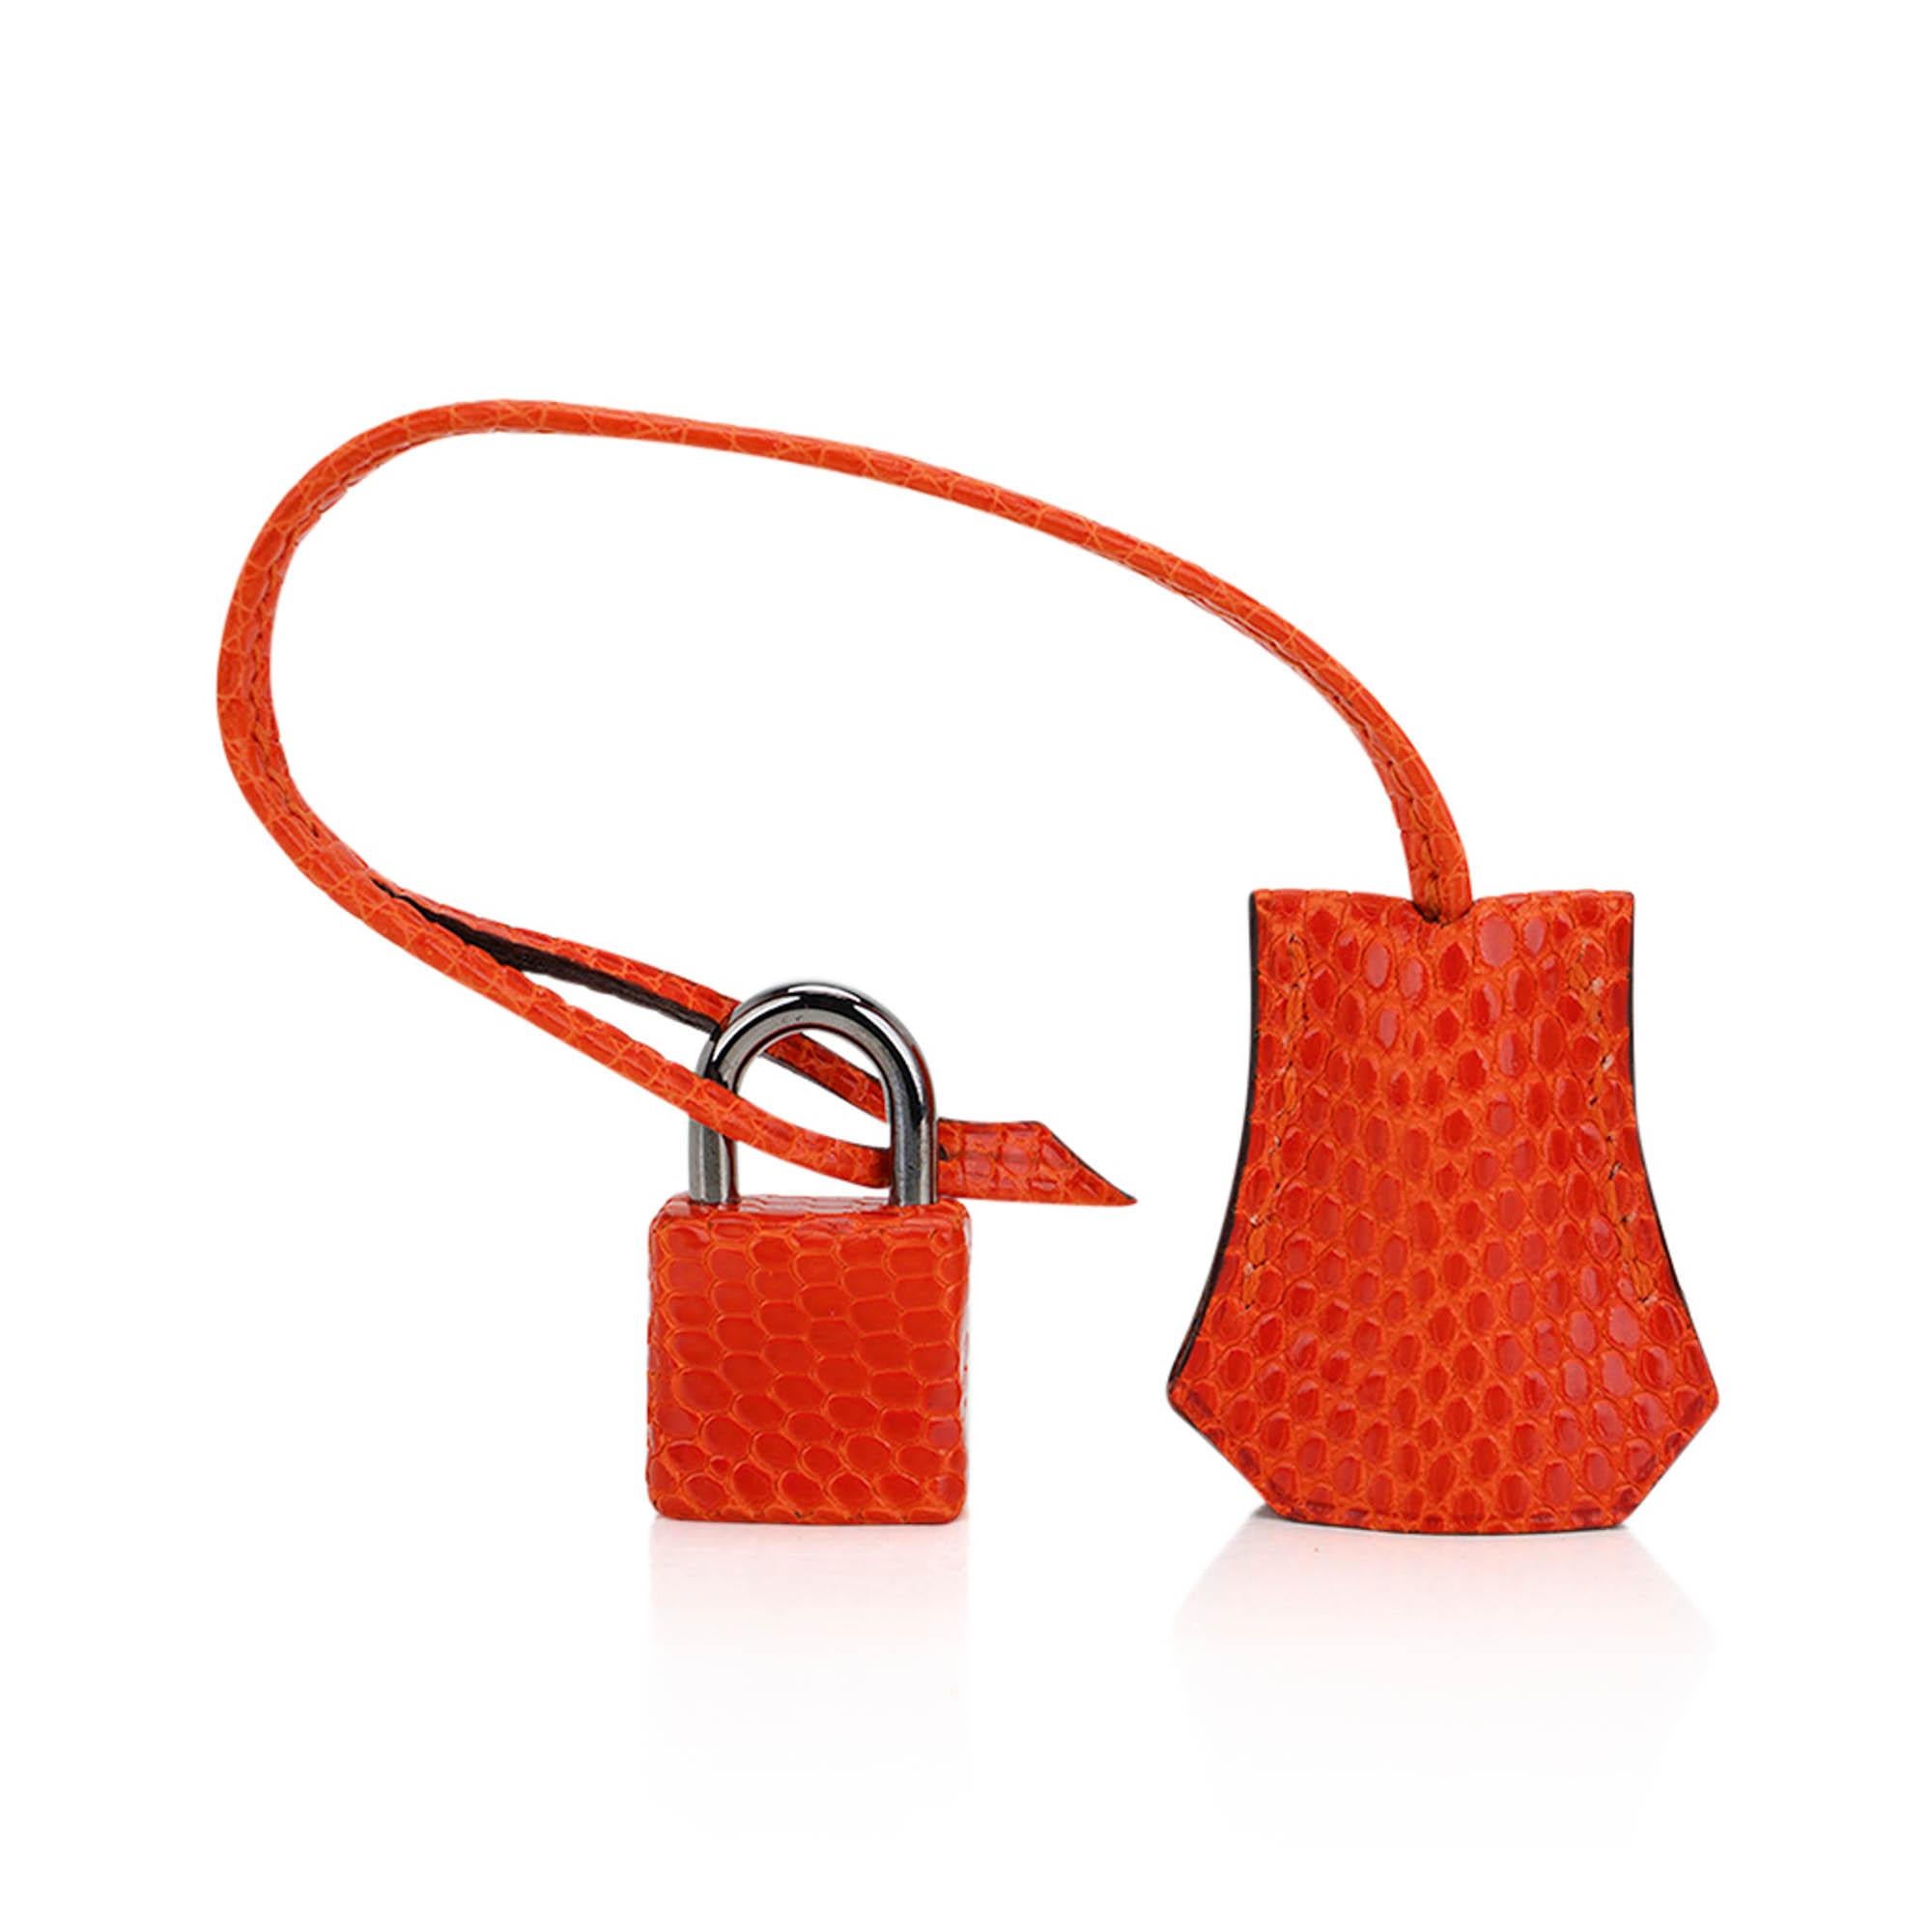 Hermes Birkin 25 Orange Tangerine Lizard Limited Edition Bag Ruthenium Hardware For Sale 4